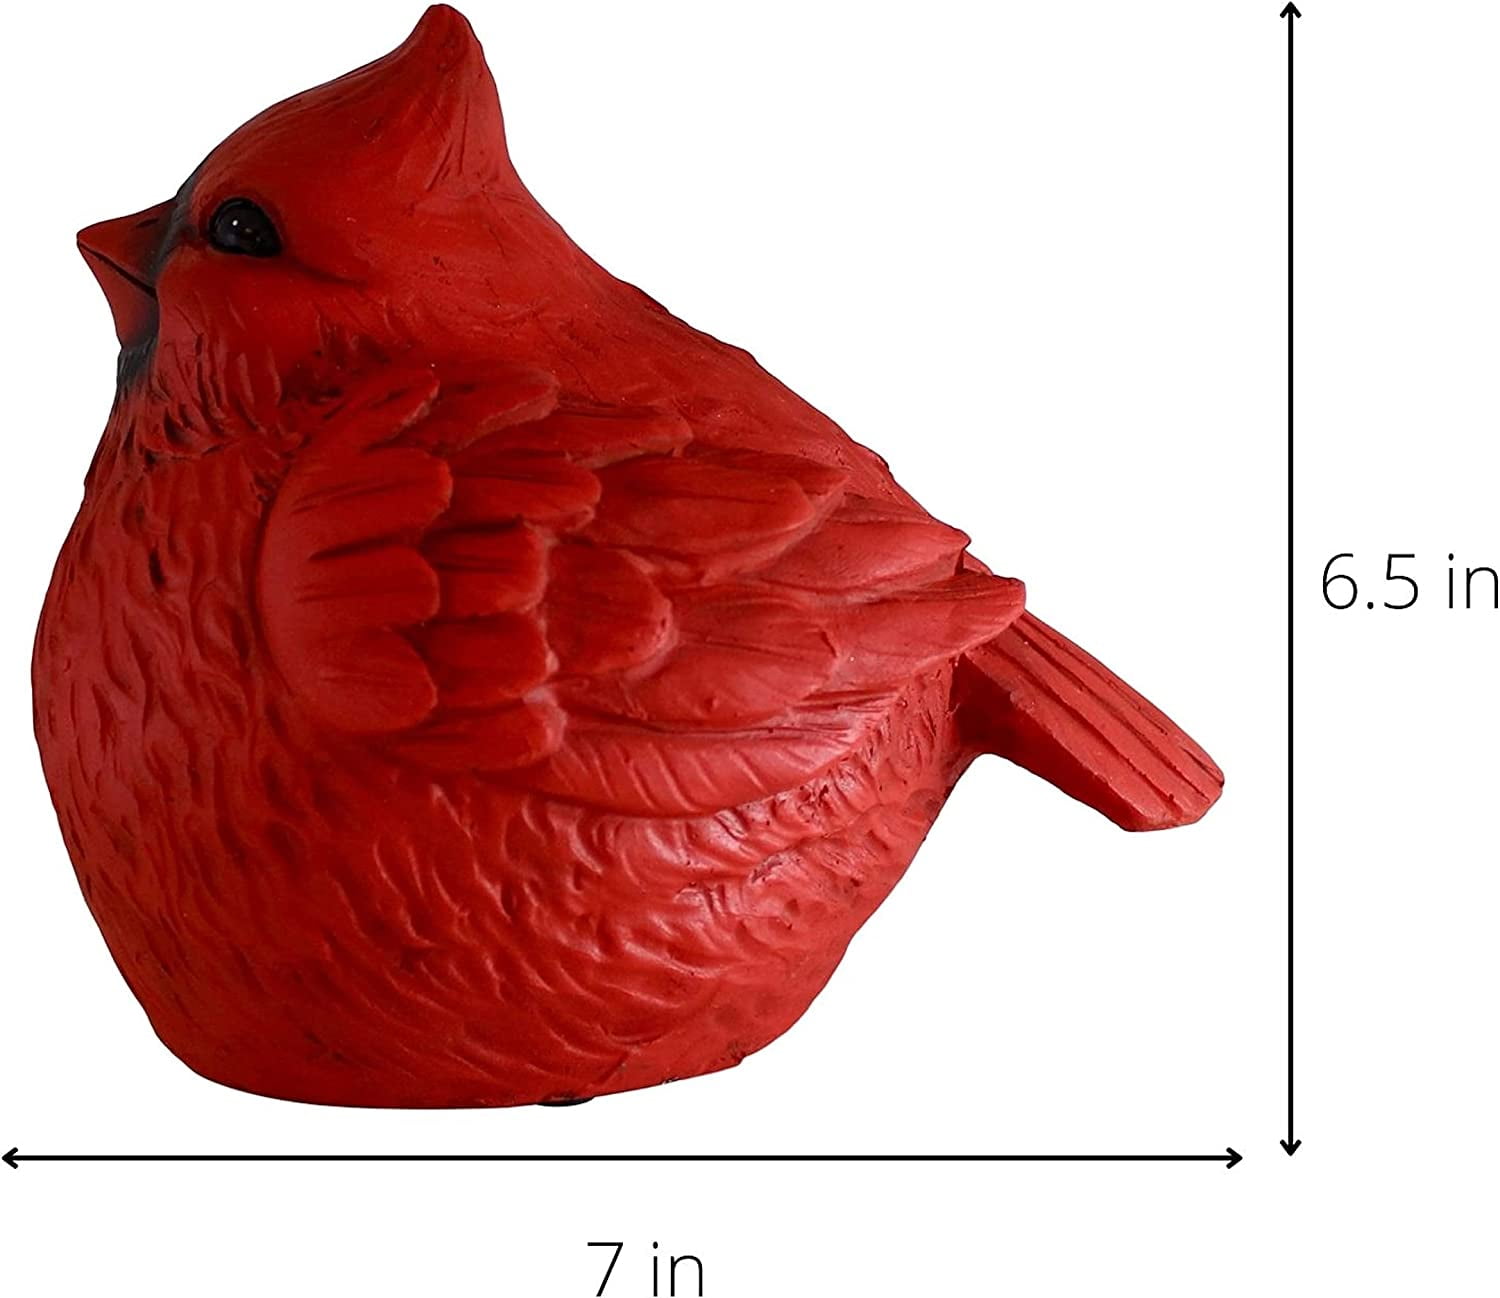 Find Keys Quickly Keychain Cardinal Birds Key Finder Holder Hanger